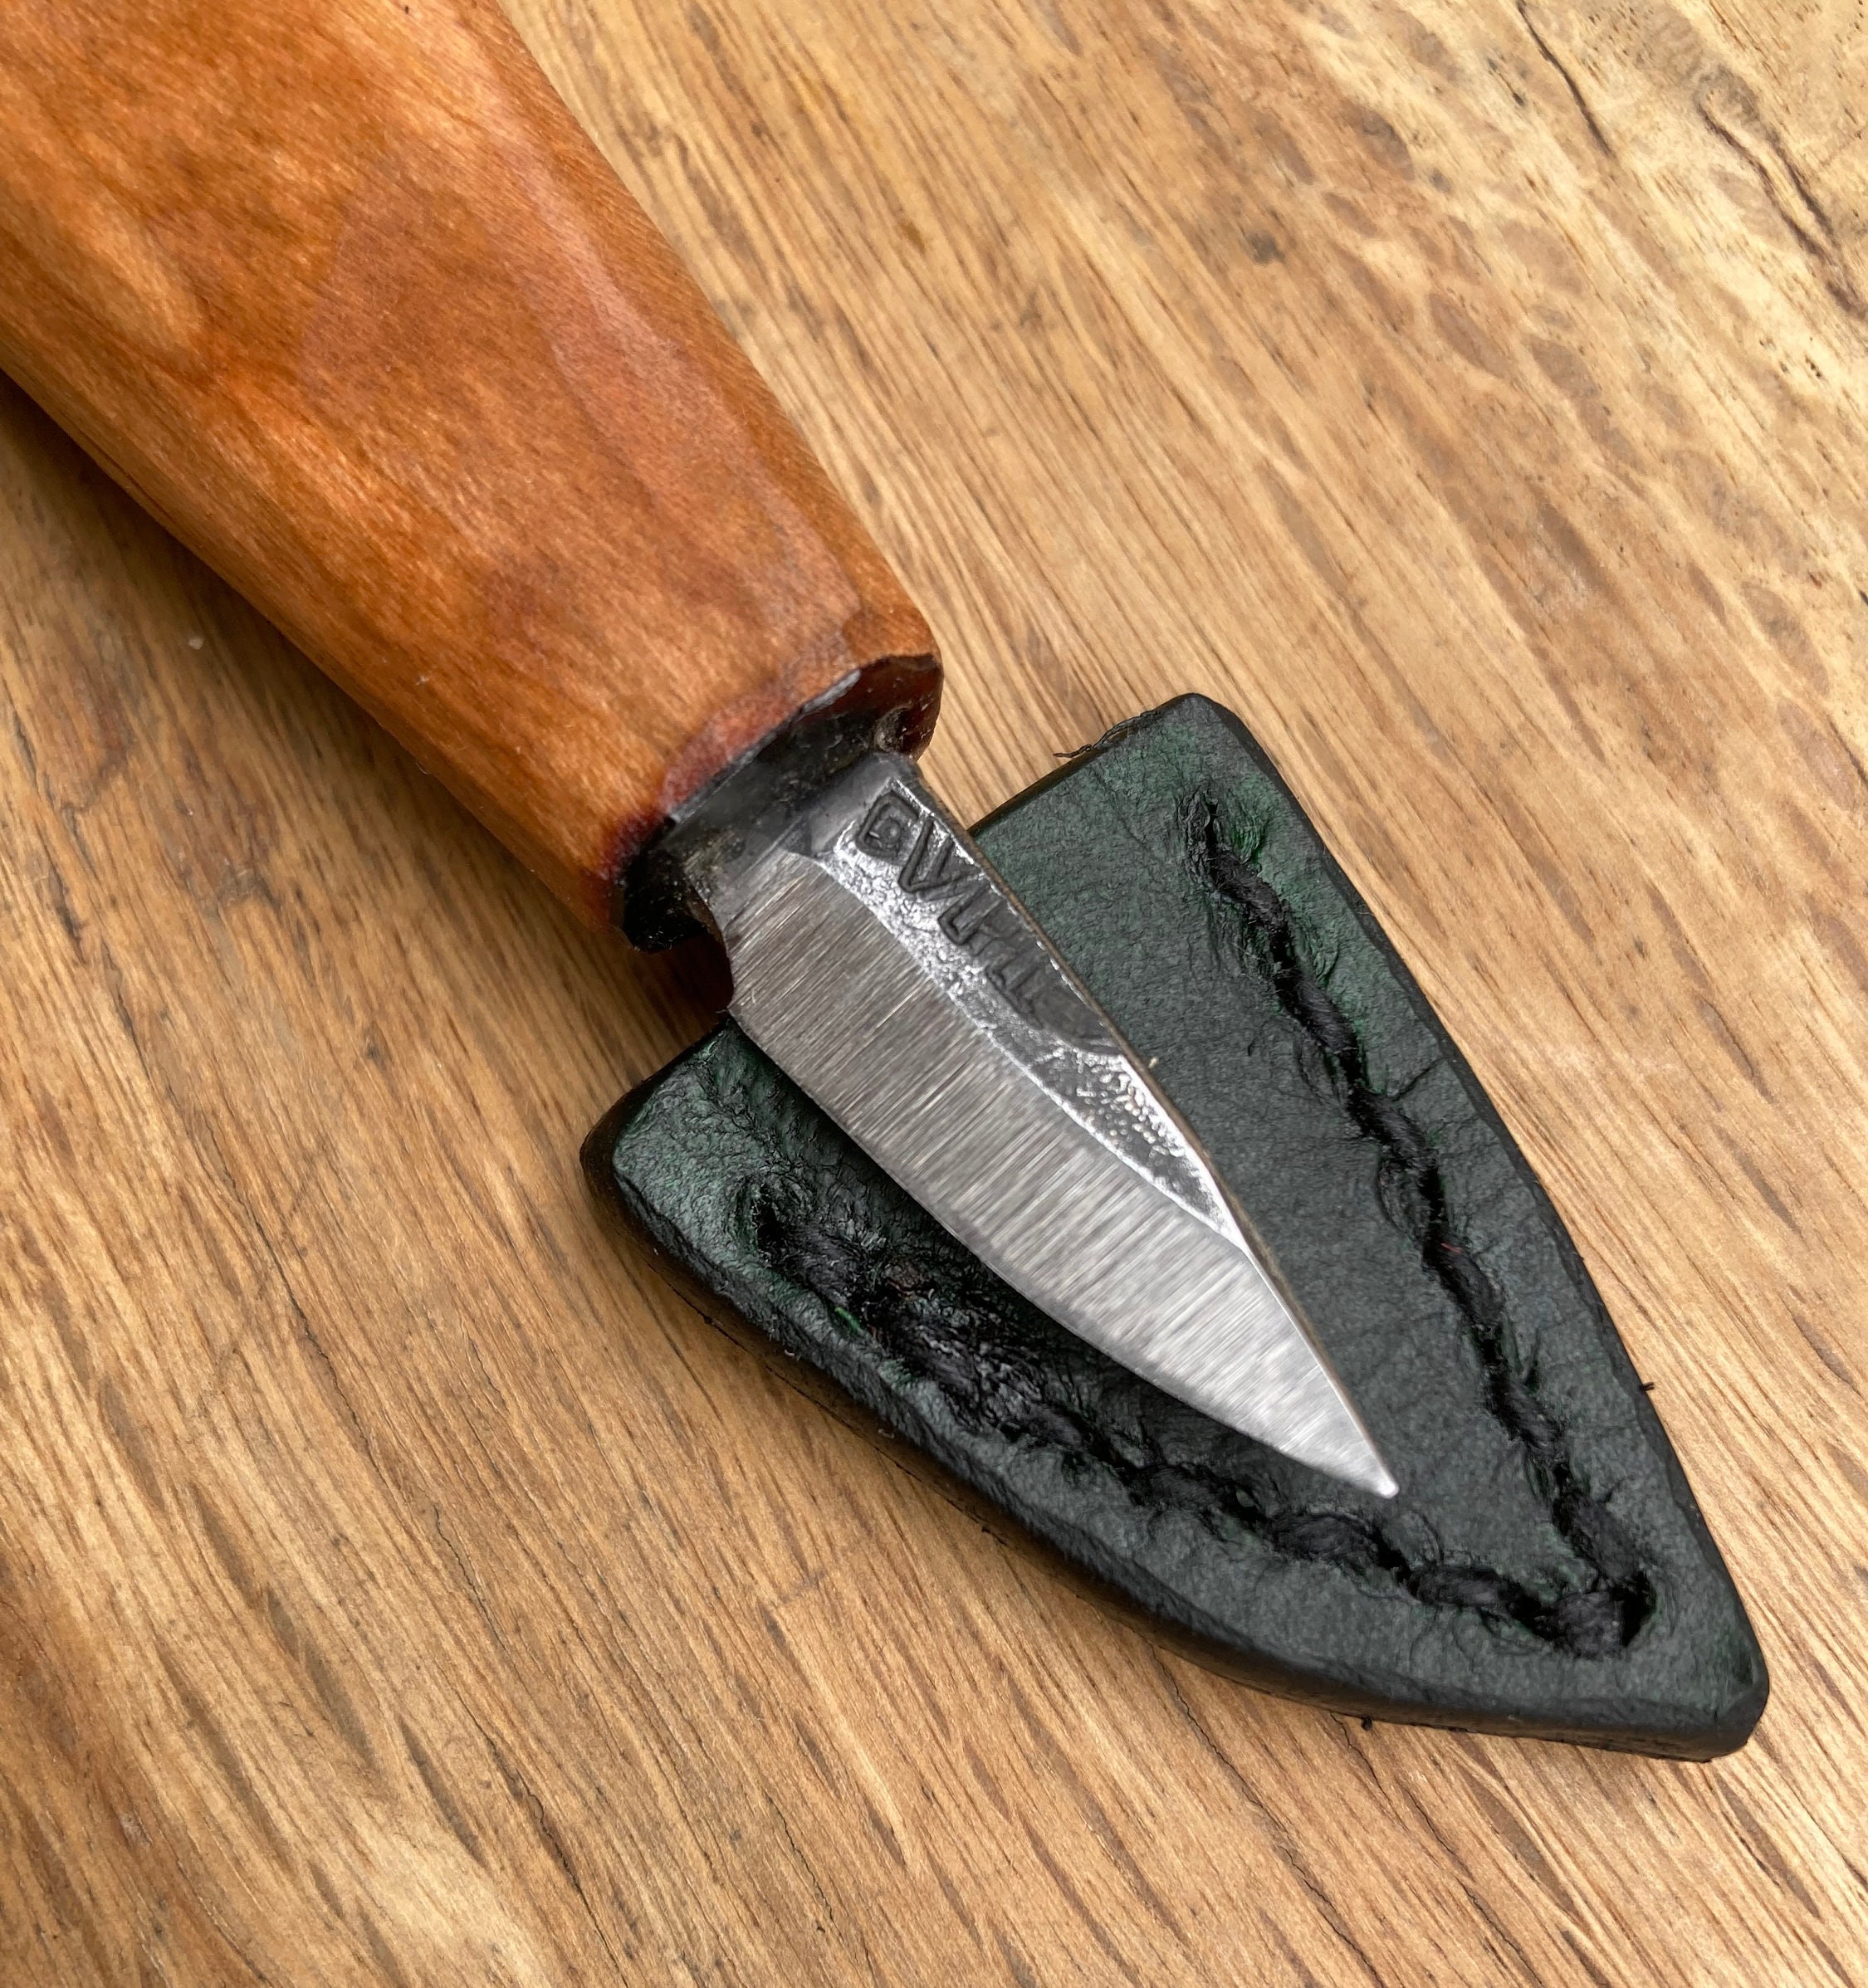 Matt White Sloyd 4 Folding temple Mountain Woodcraft Wood Carving Knife  With Locking Blade 